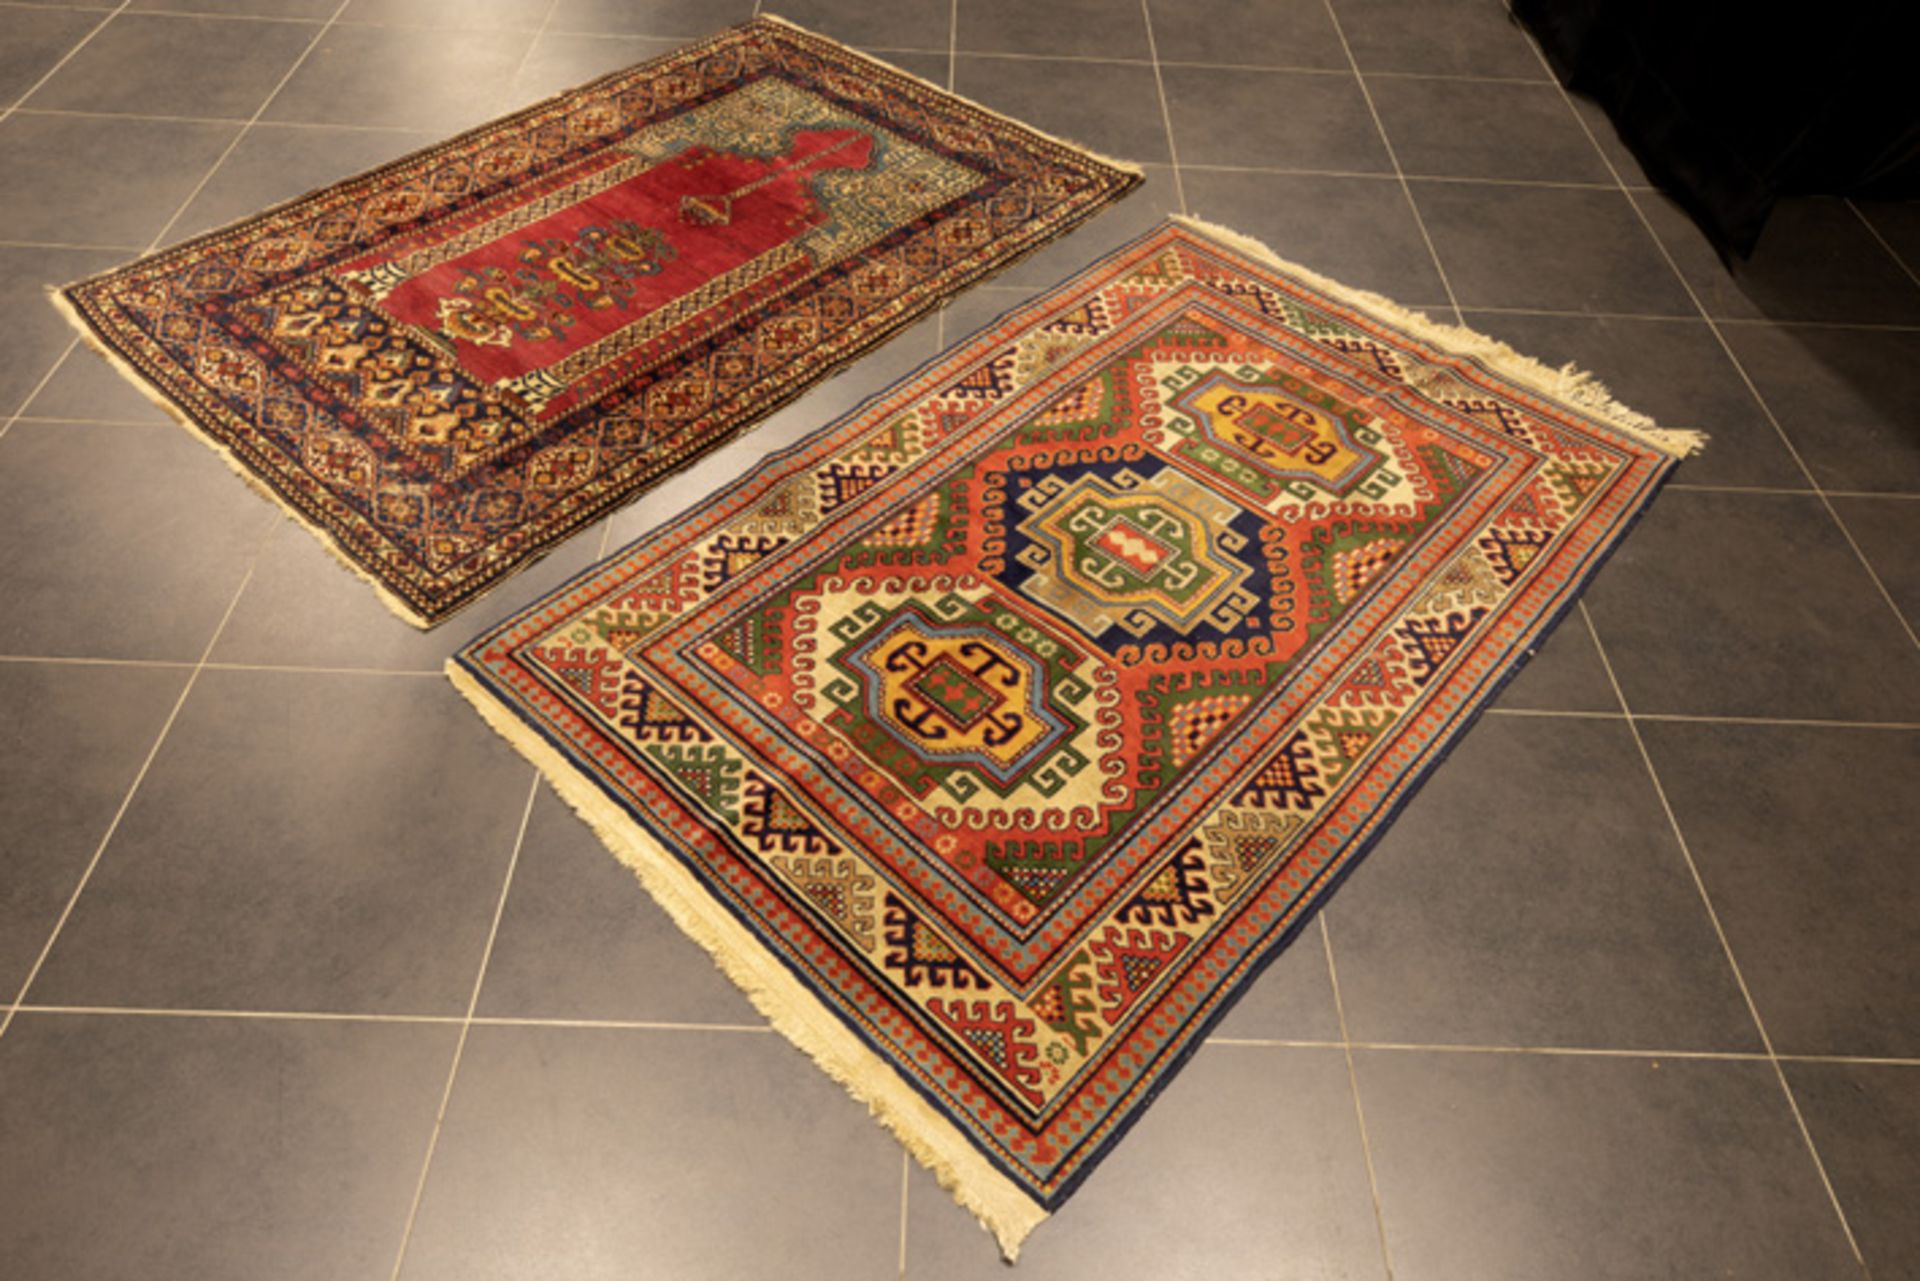 two Persian dozar carpets amongst which an antique Afshar praying rug || Lot (2) van een Perzisch